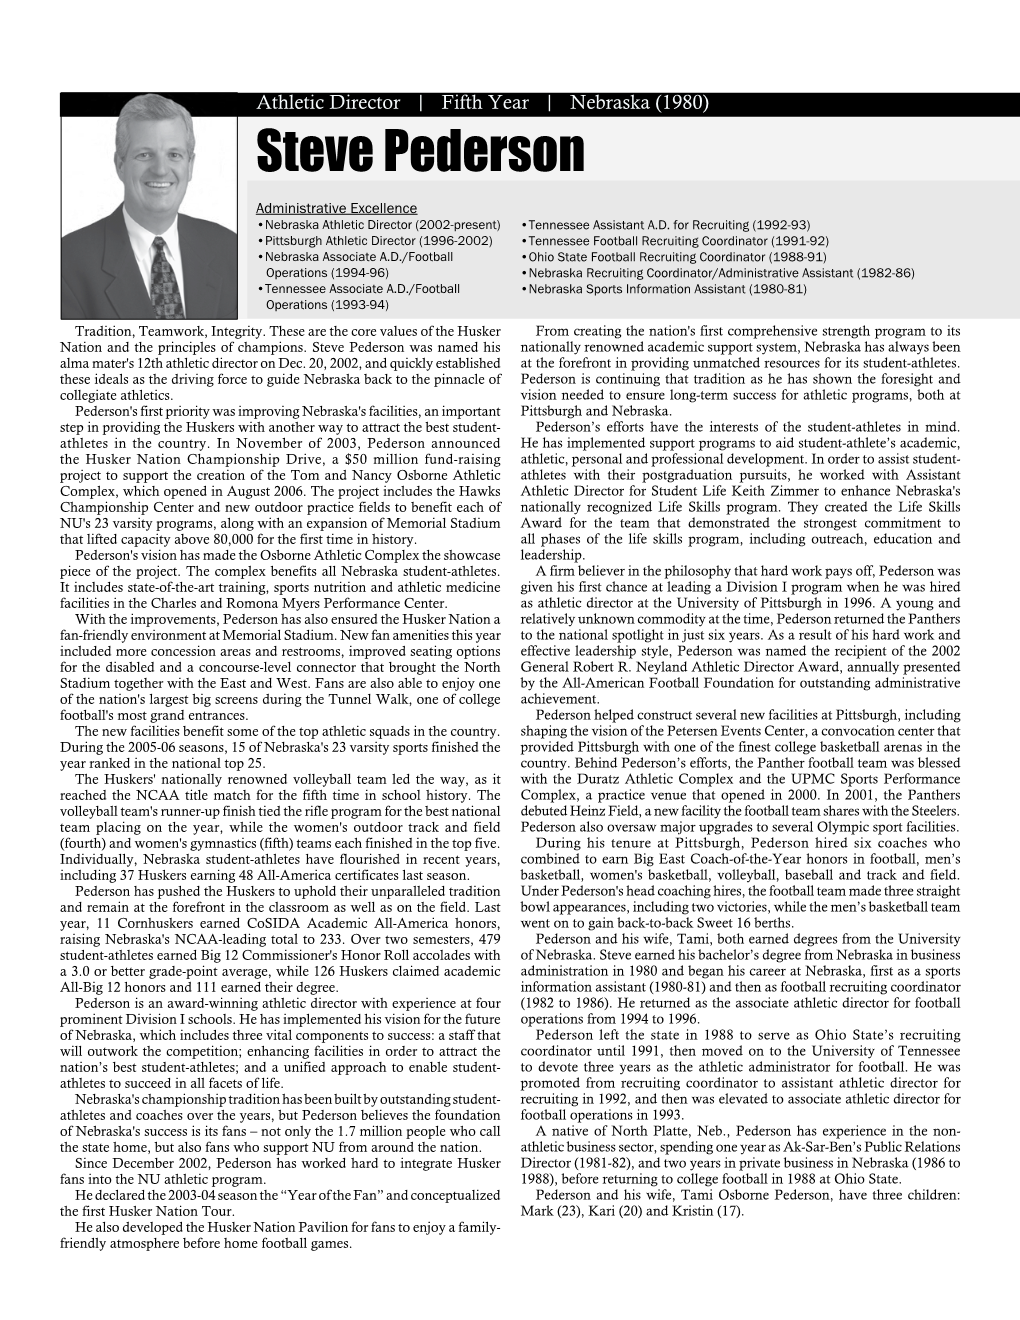 Steve Pederson Administrative Excellence •Nebraska Athletic Director (2002-Present) •Tennessee Assistant A.D